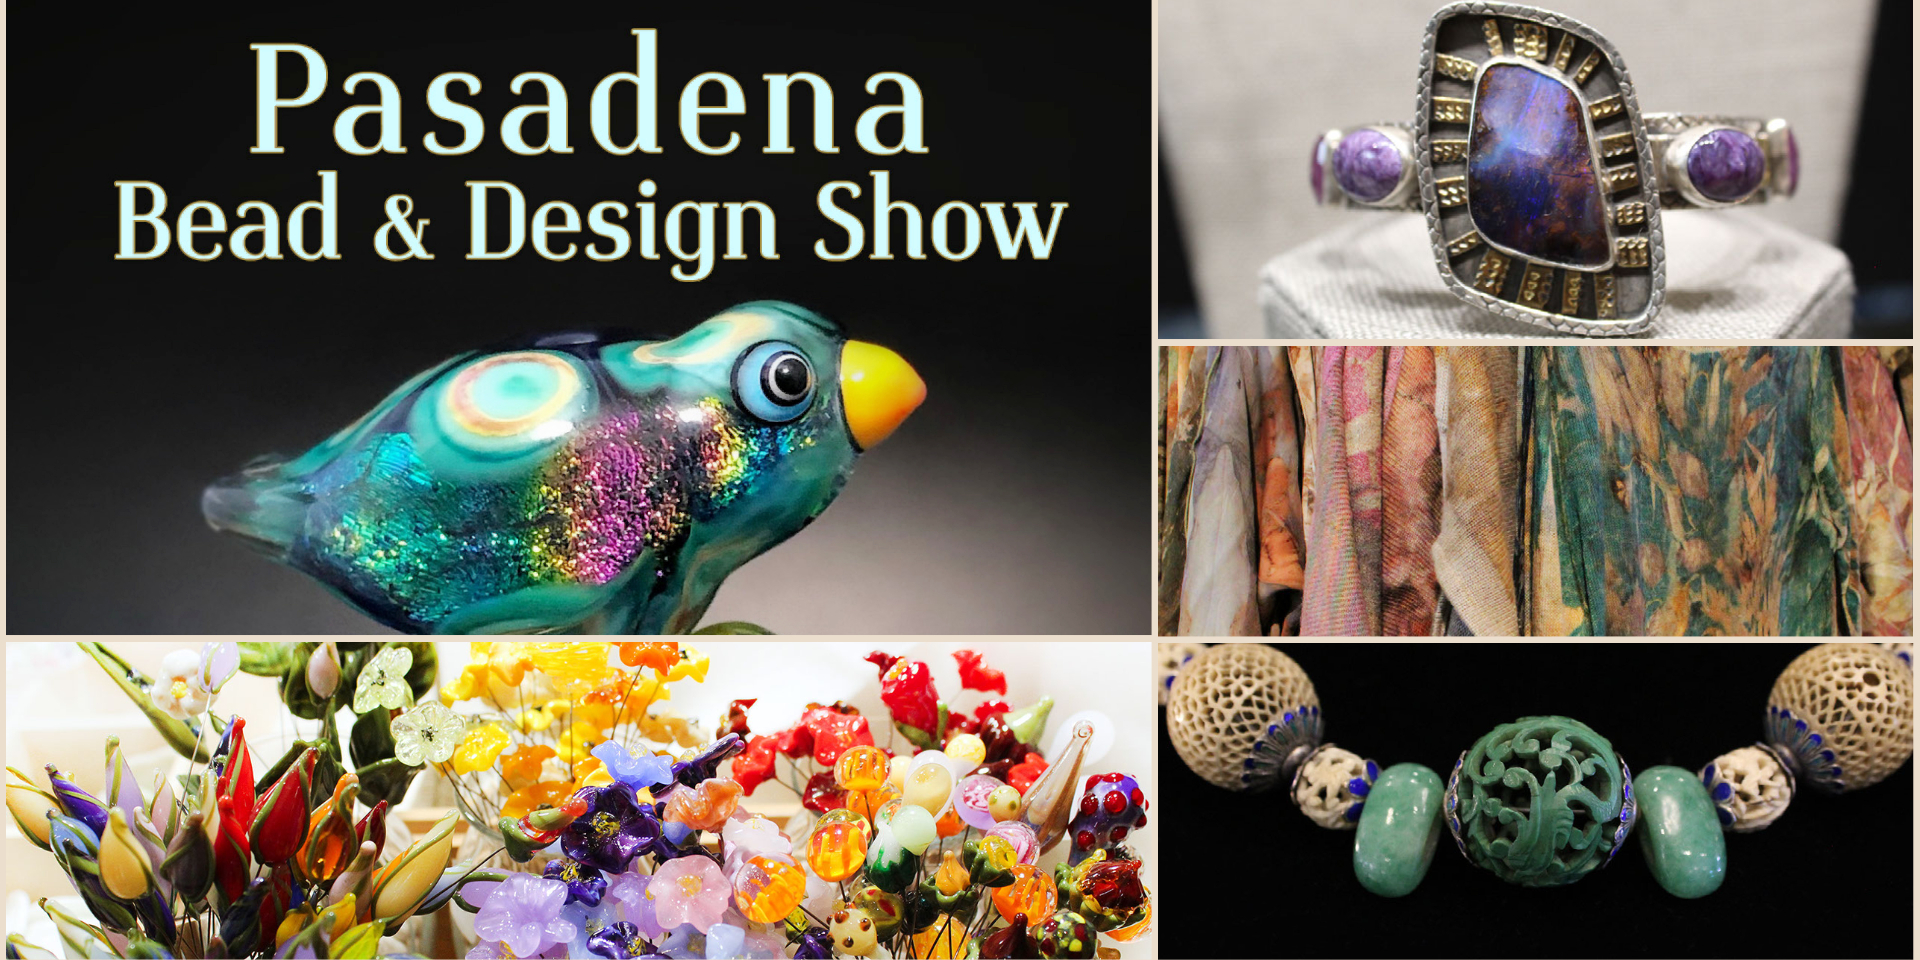 Pasadena Bead & Design Show, Pasadena, California, United States